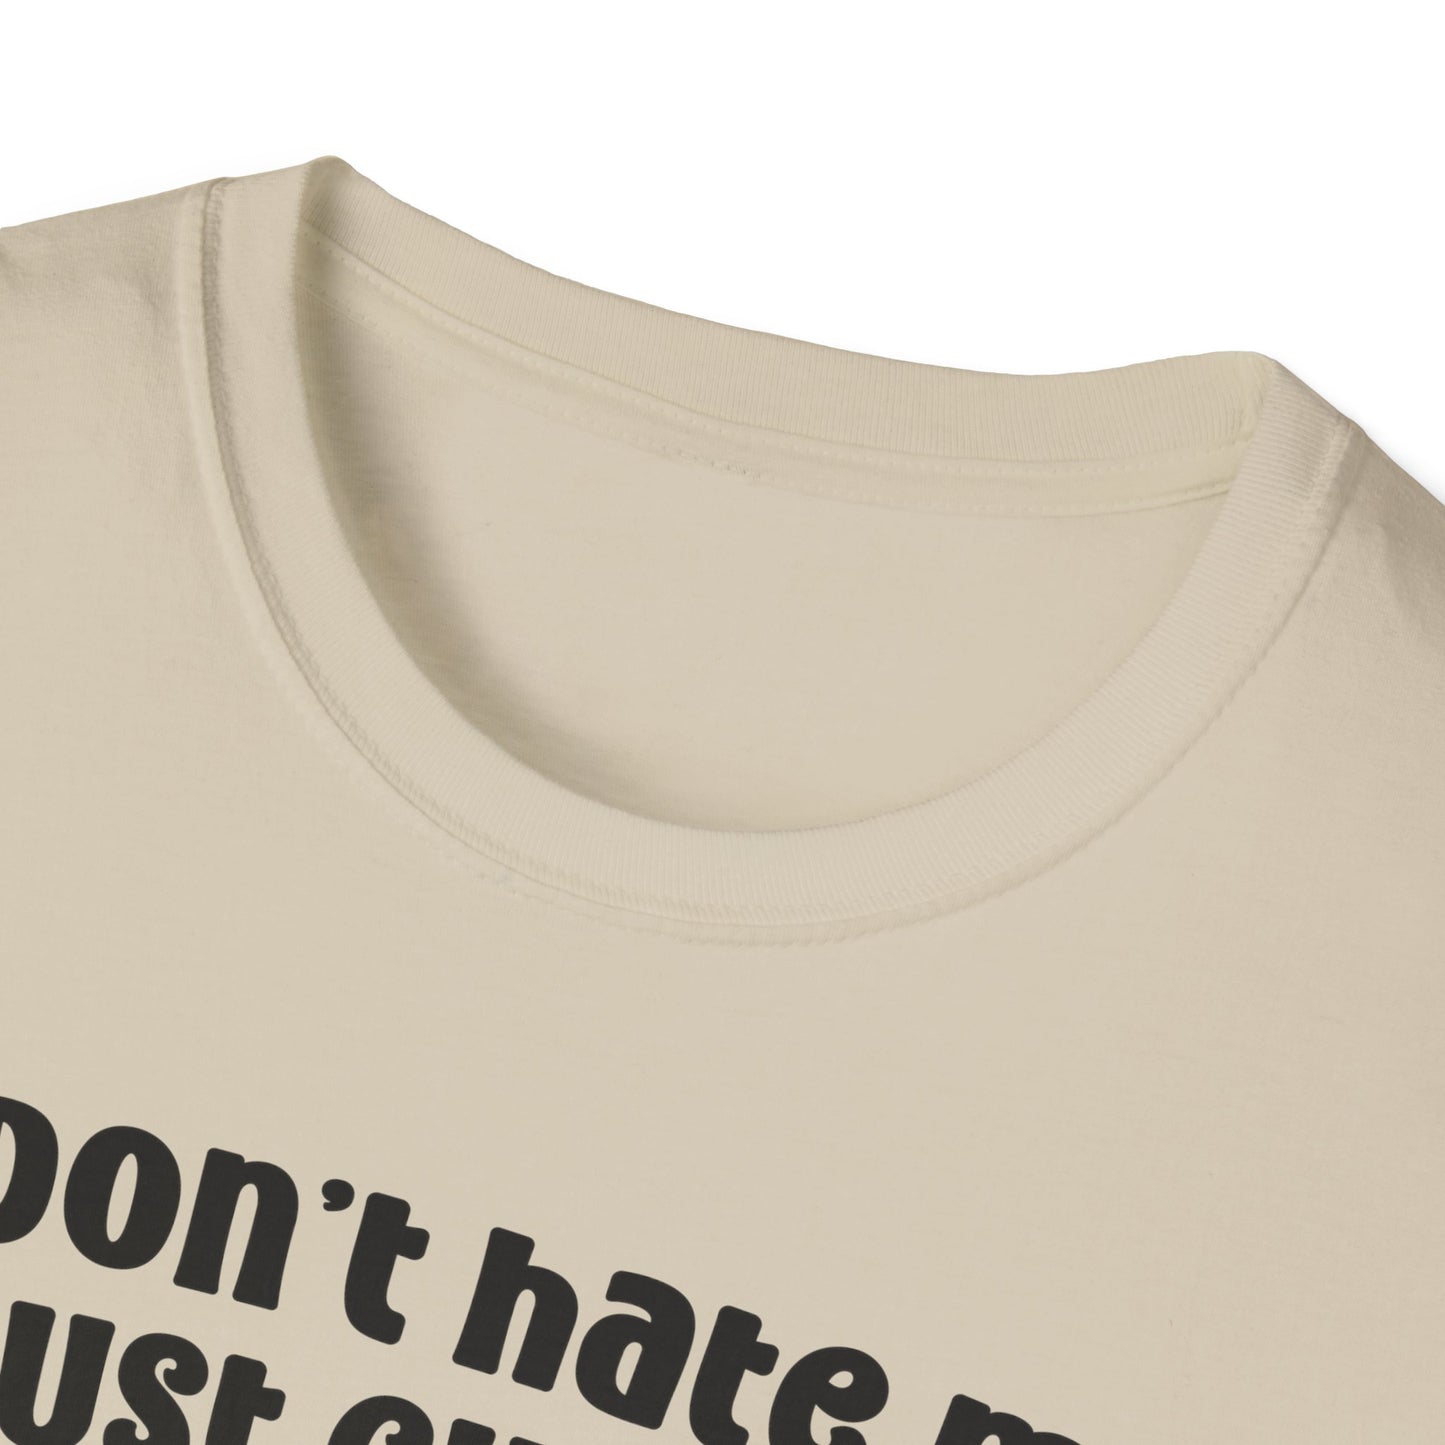 "Dont Hate Me Just Cuz Im A Little Cooler" Unisex Softstyle T-Shirt